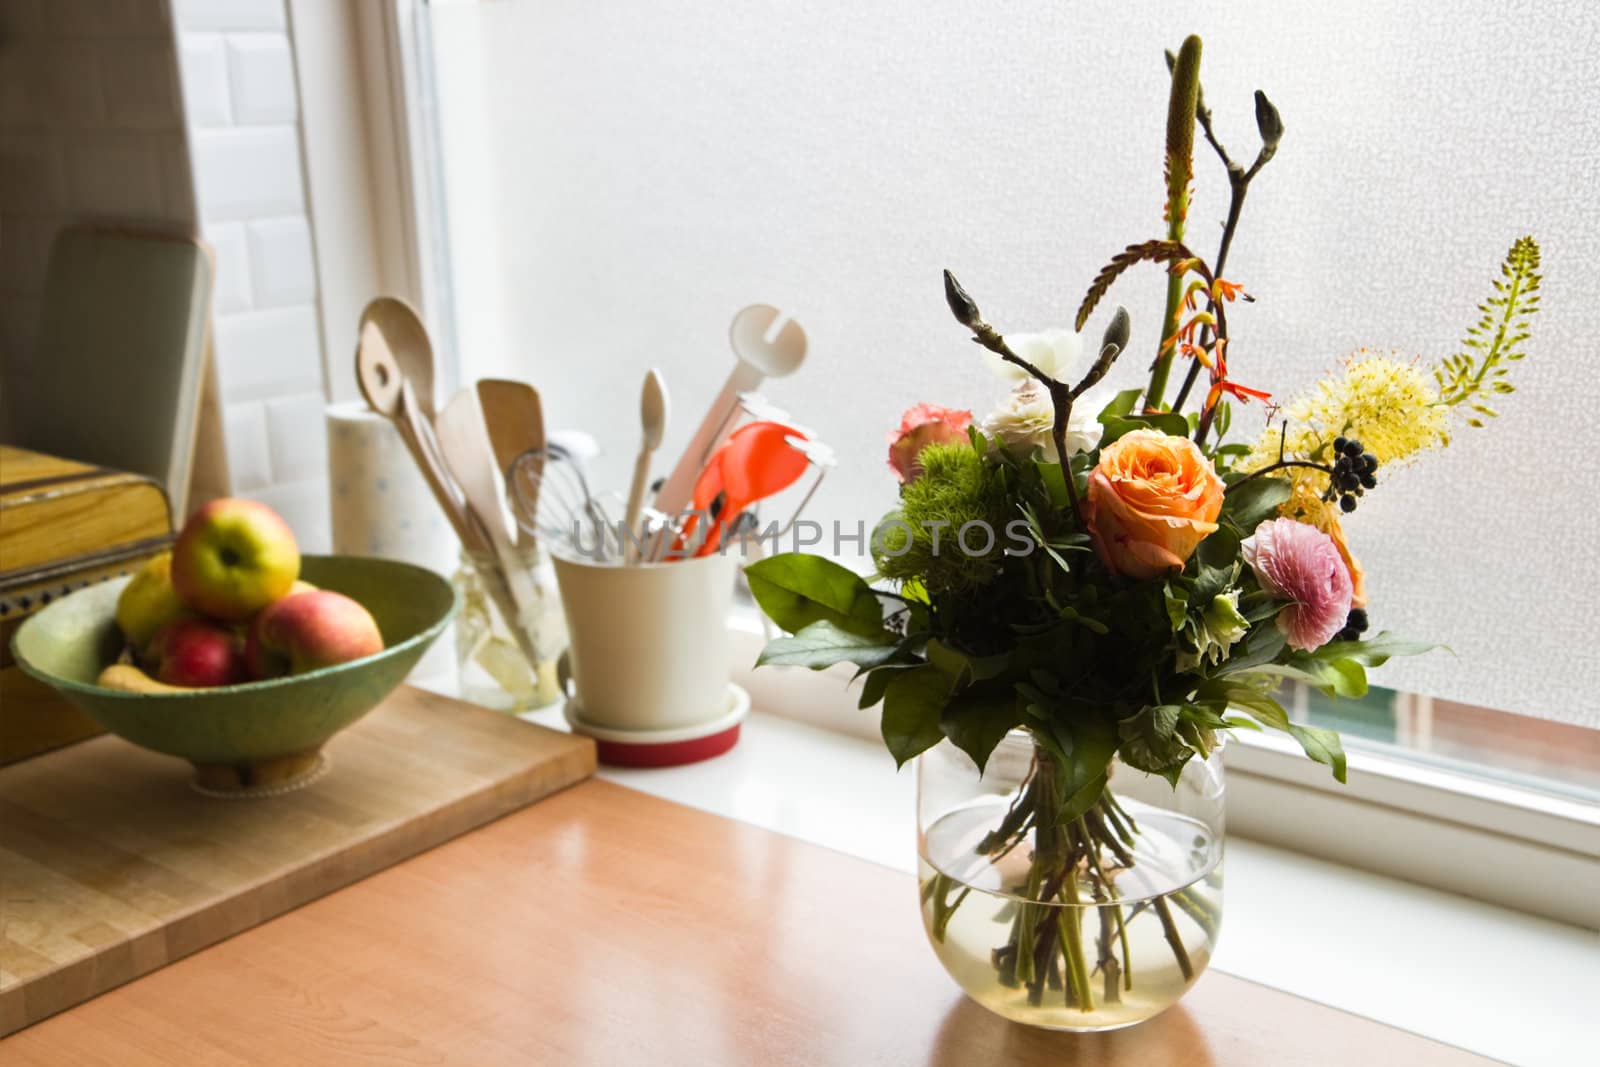 Bouquet of flowers on dresser in modern kitchen with window in background